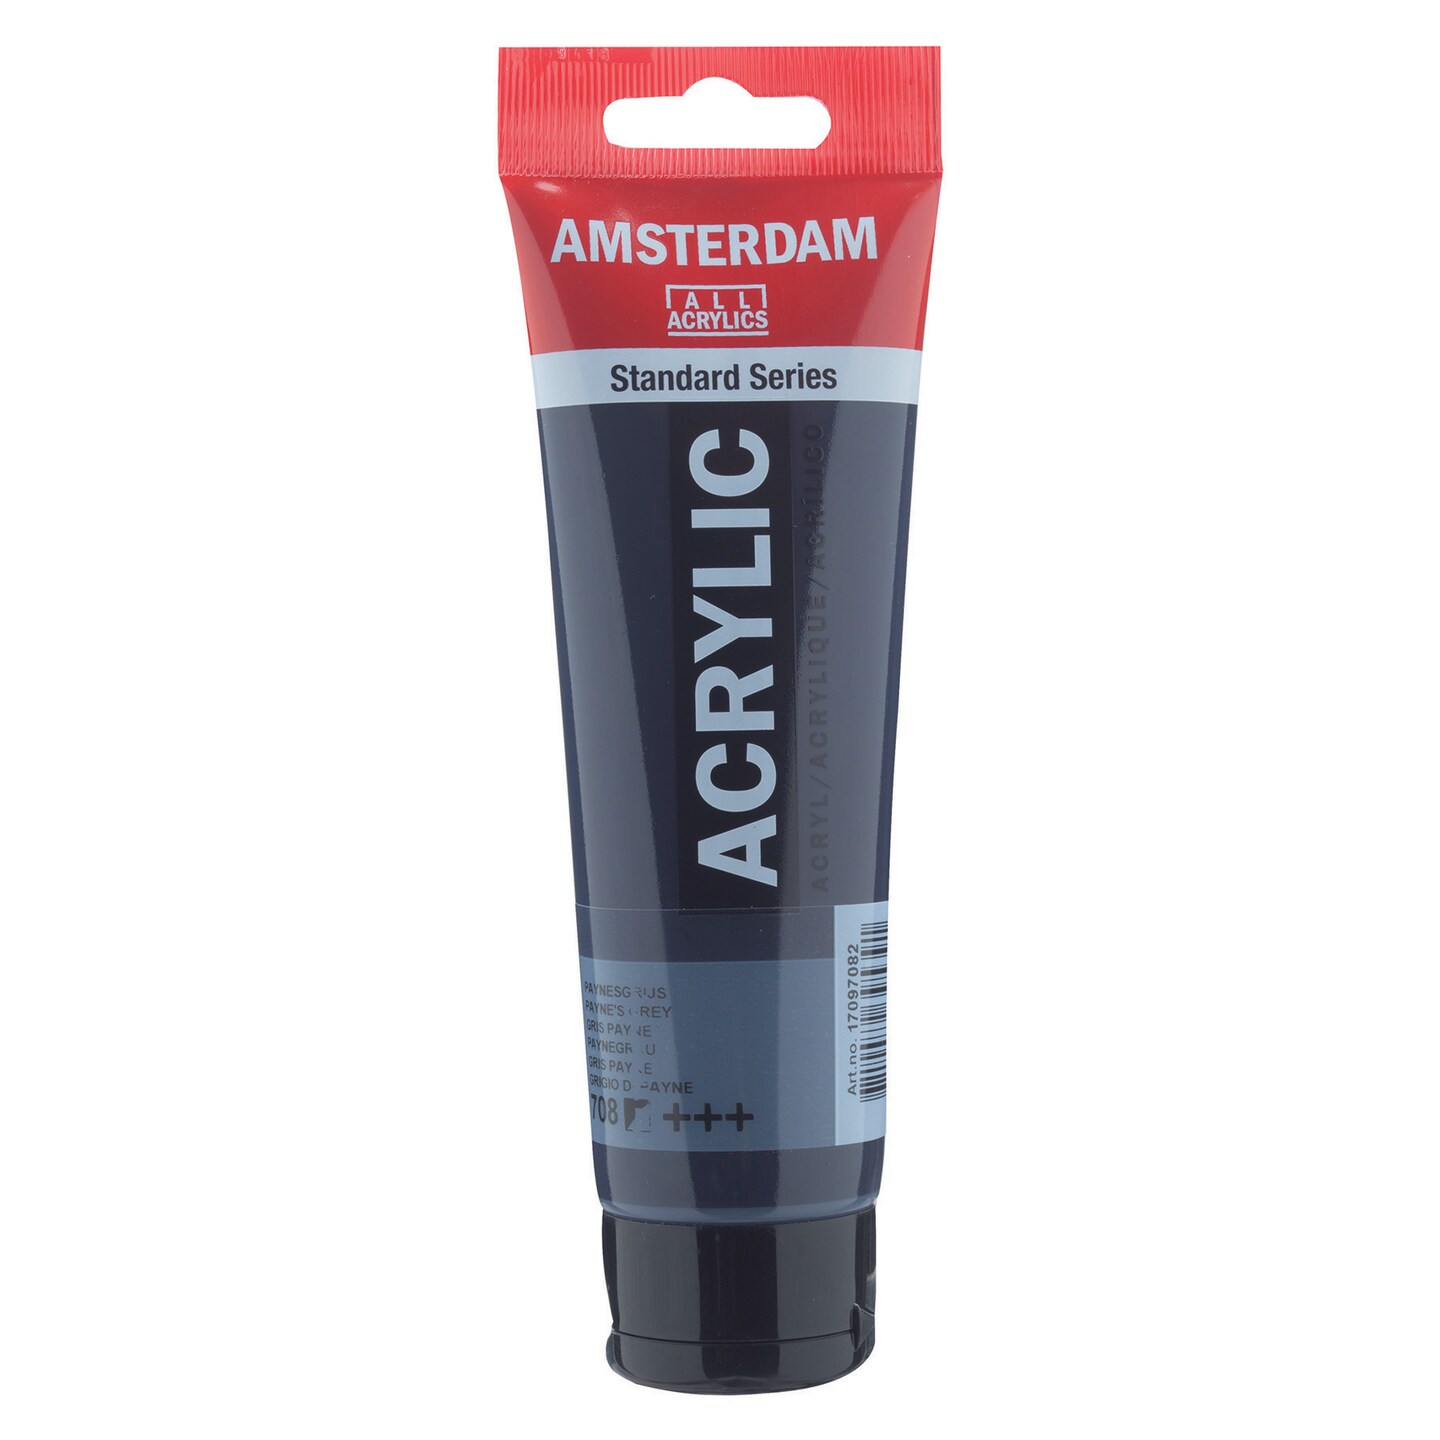 Amsterdam Acrylic Paint Standard Series 120ml